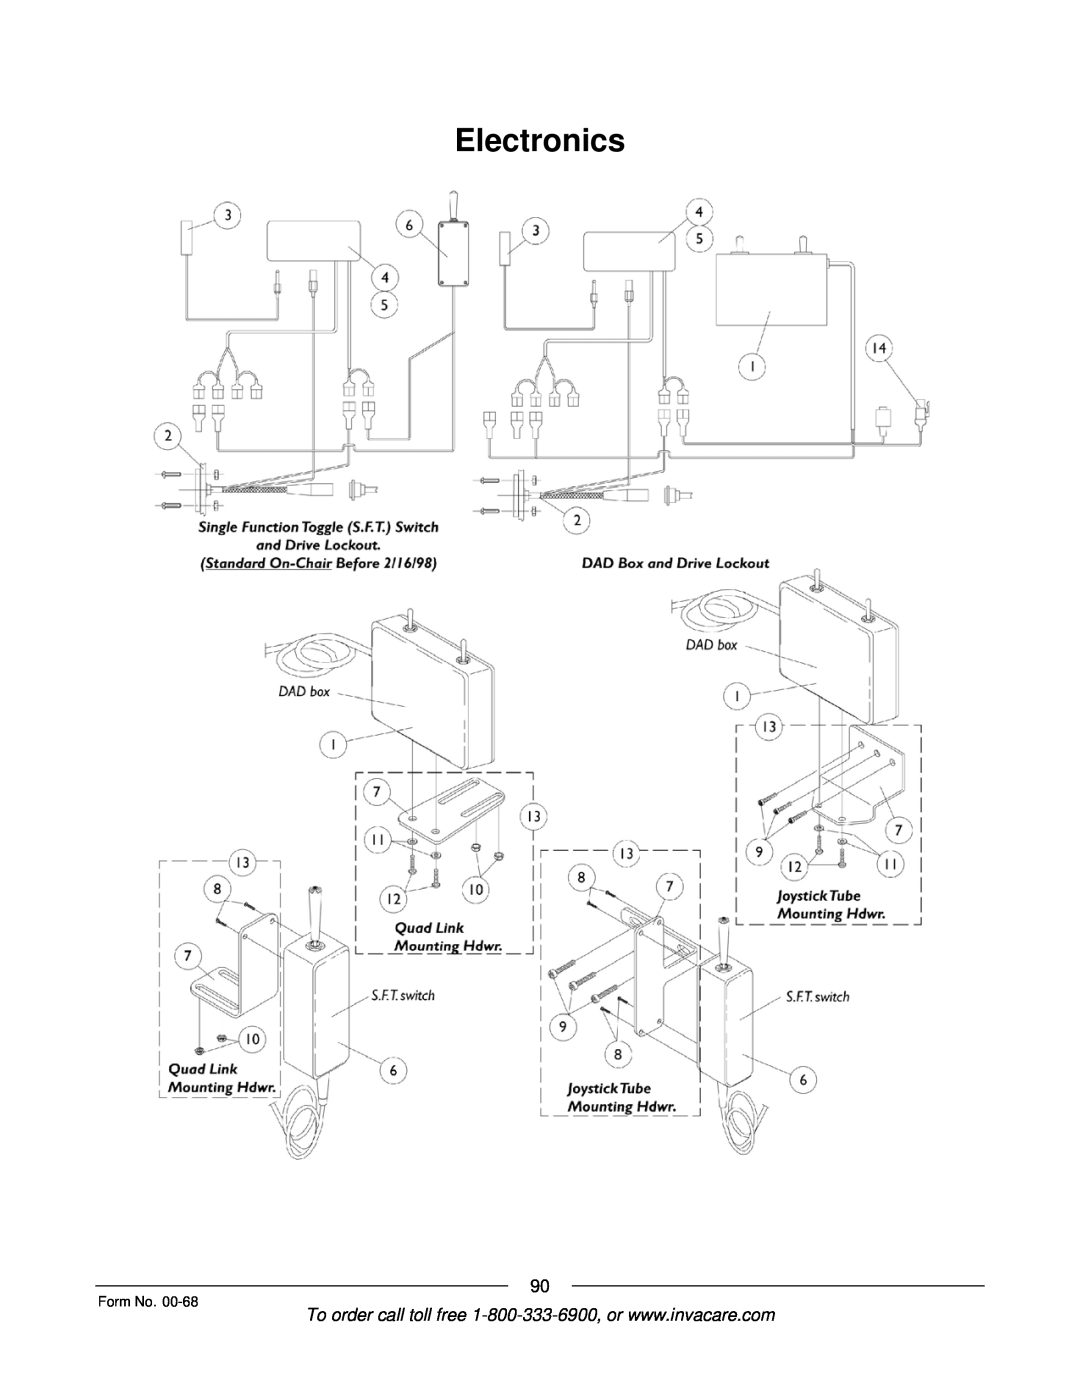 Invacare R2TM manual Electronics, Form No 